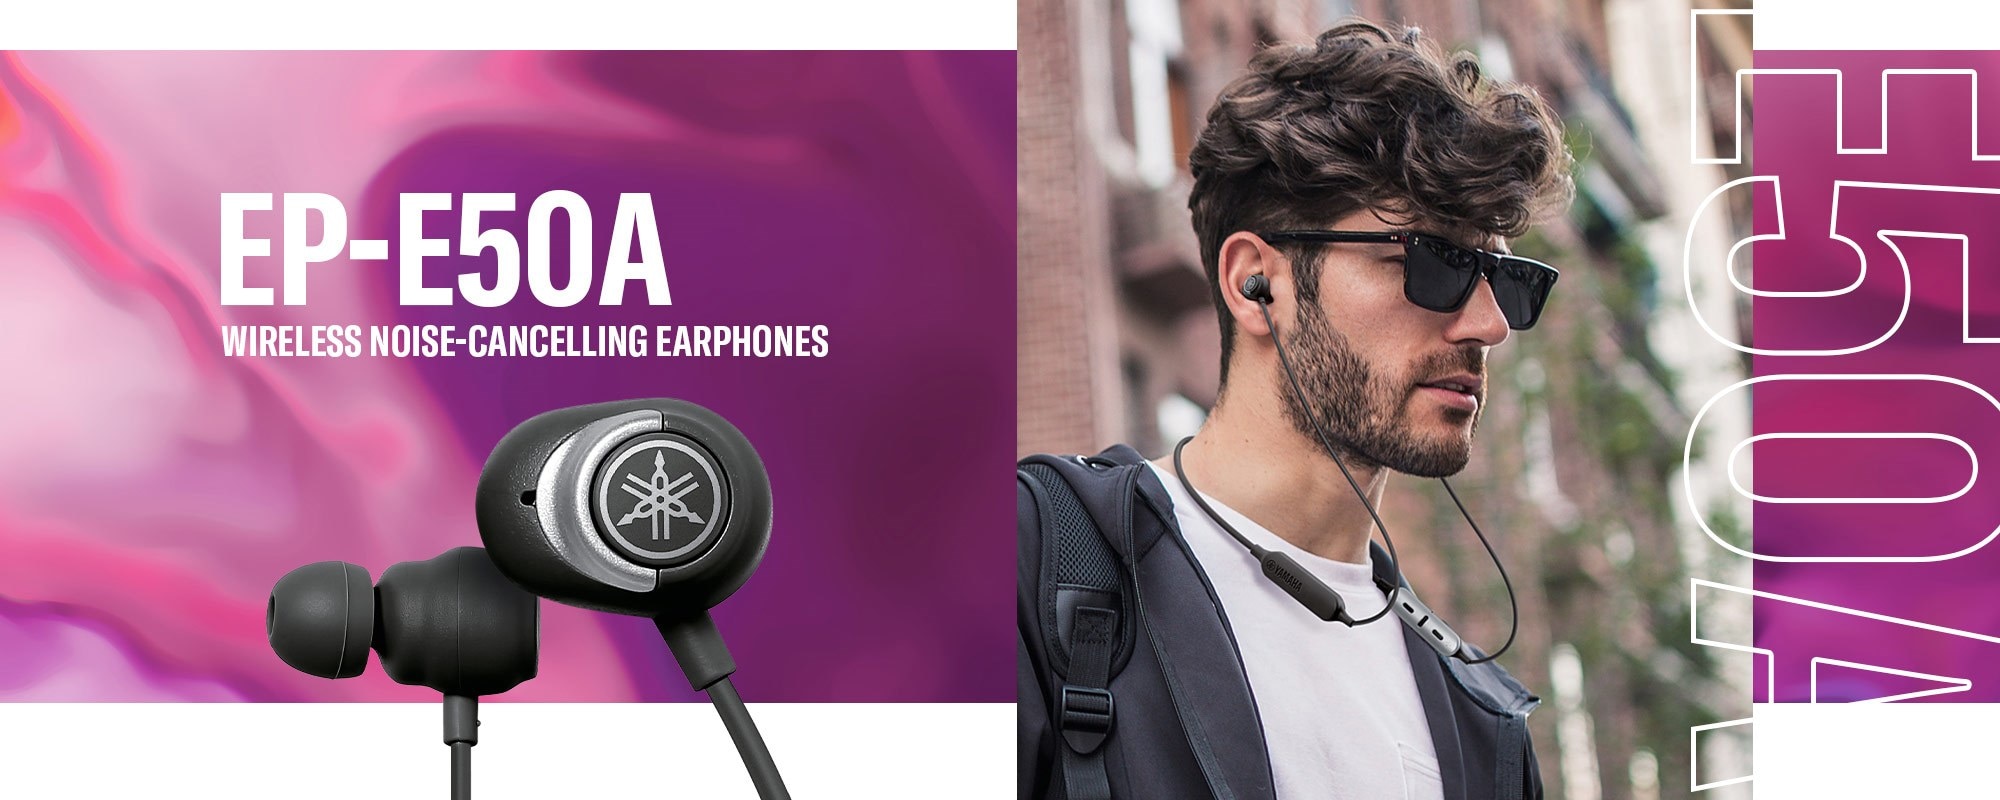 Yamaha EP-E50A Wireless Noise-Cancelling Earphones Header - Desktop